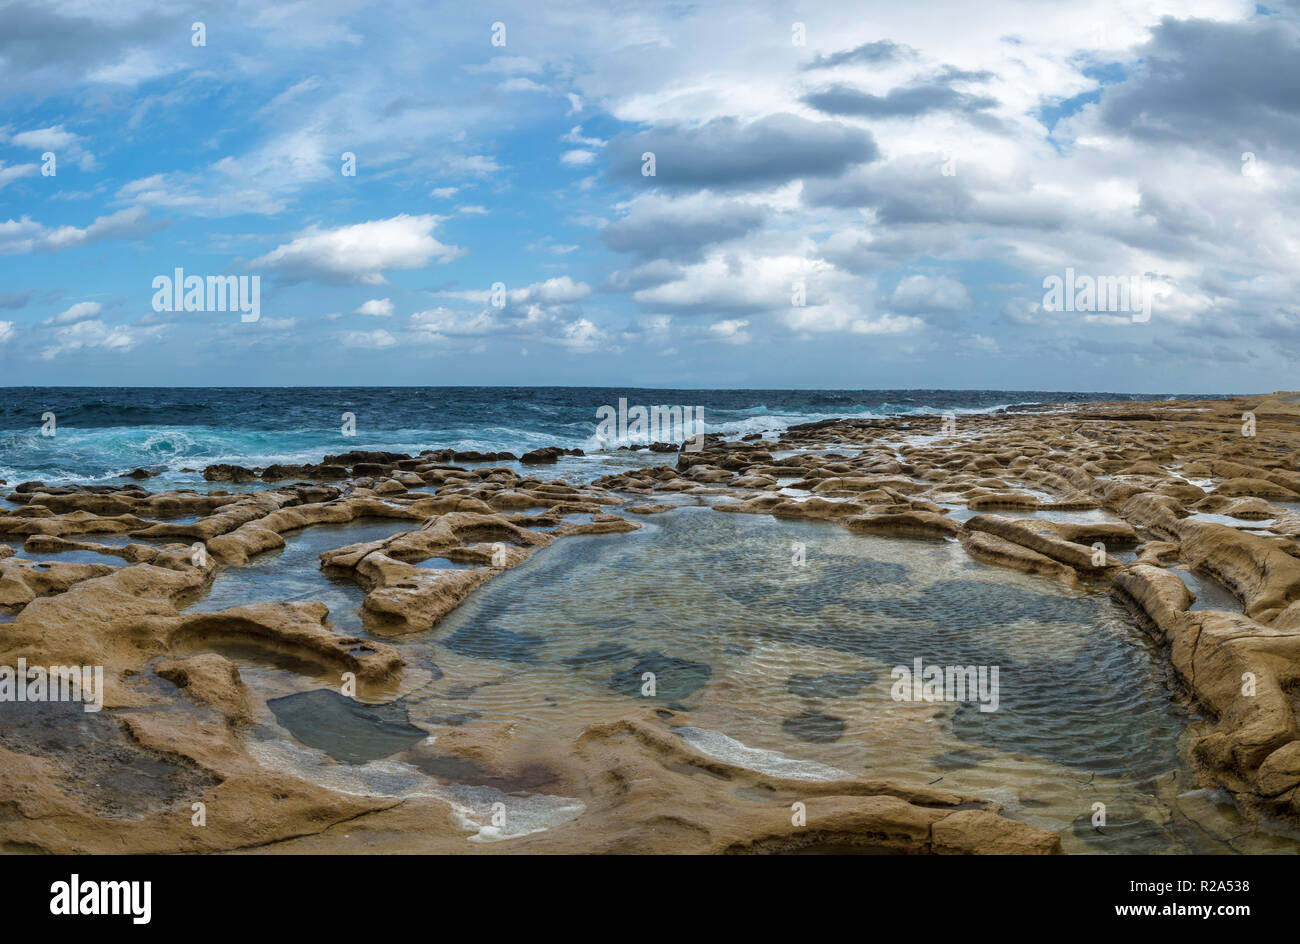 The rocky coast of Sliema, close to Valletta, Malta. Stock Photo